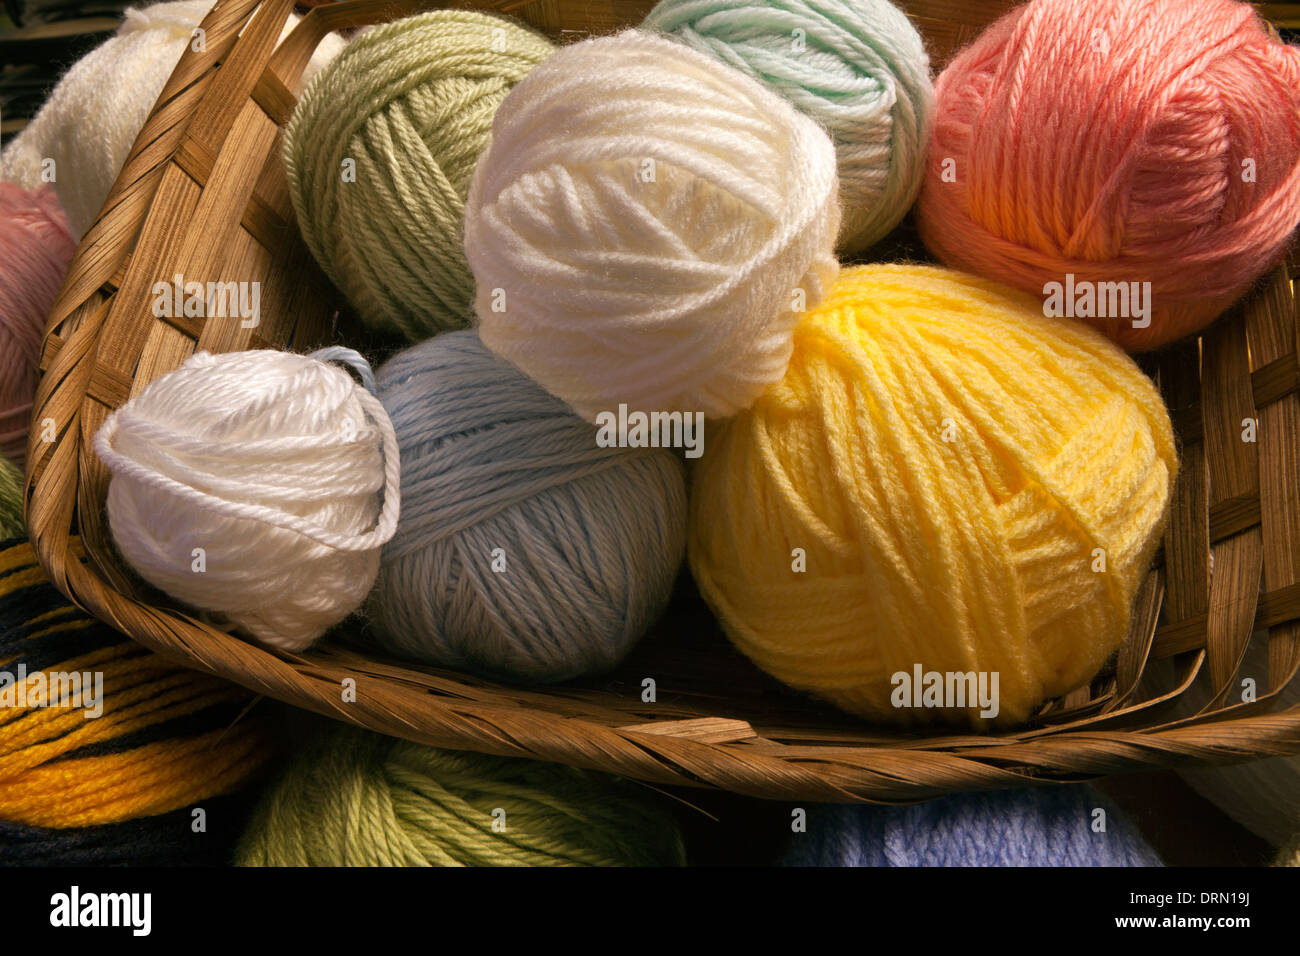 WASHINGTON - Balls of left over yarn in a basket. Stock Photo